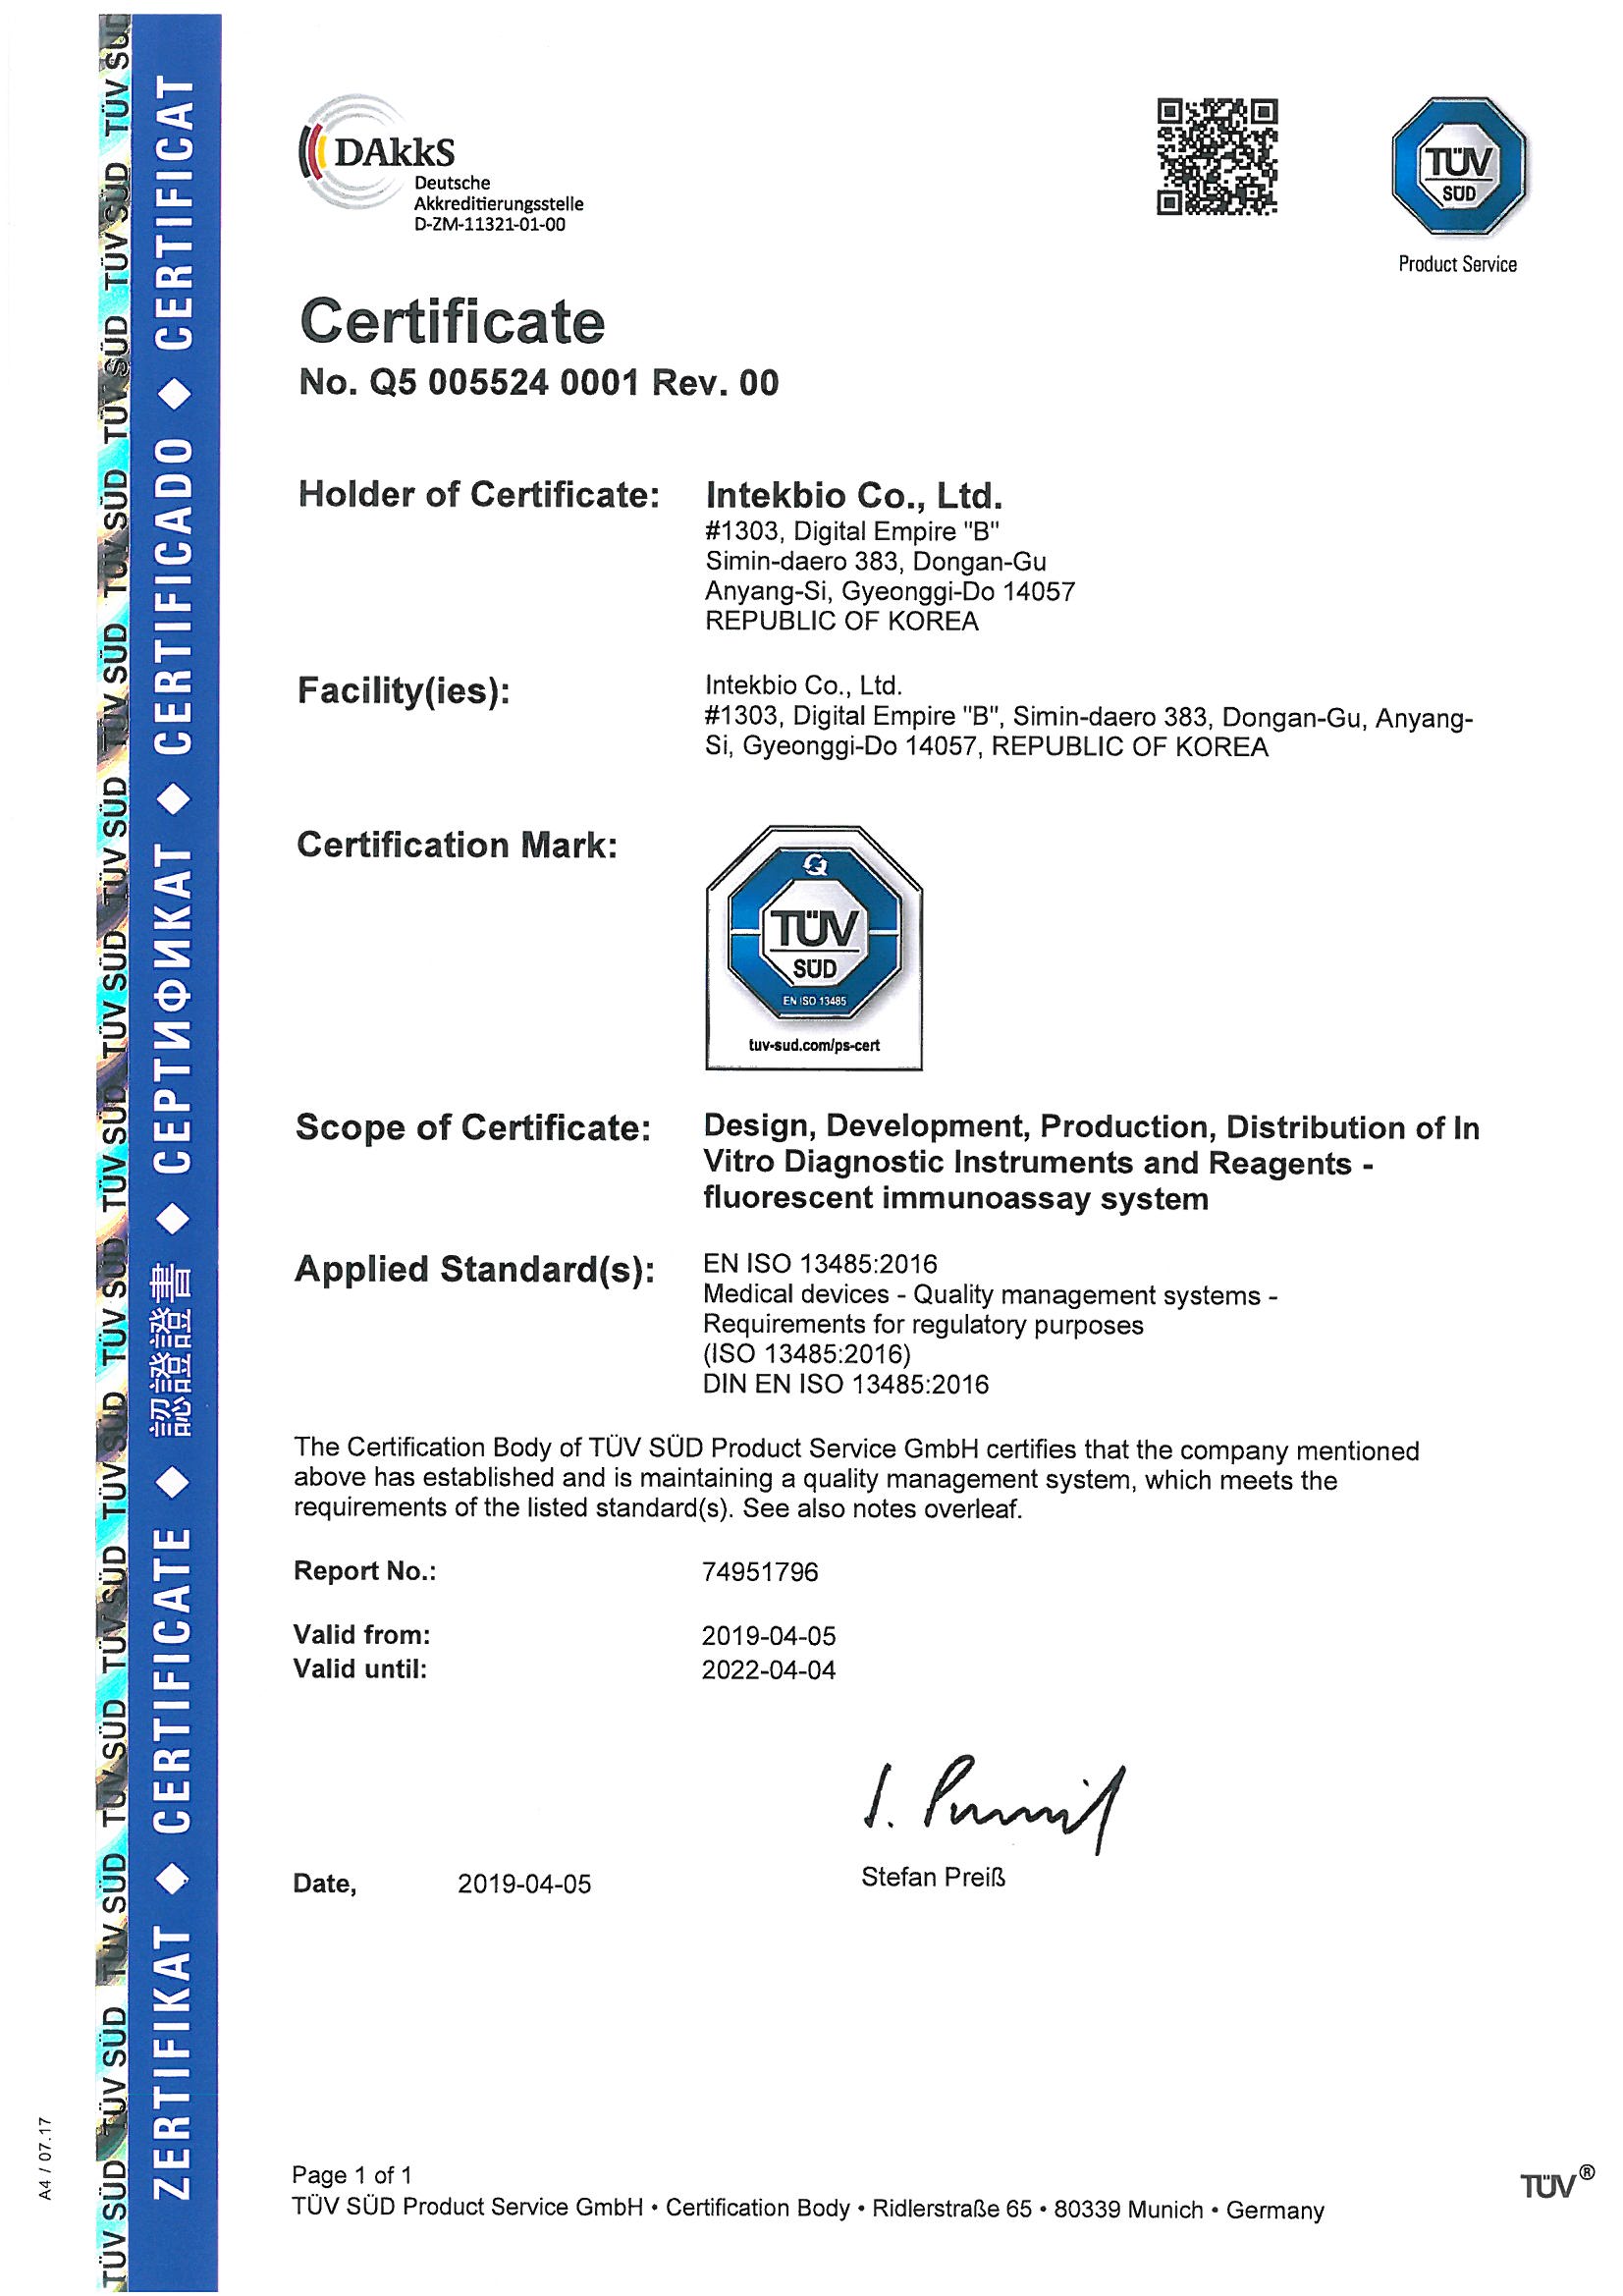 1683770888.8831190405_ISO 13485 Certificate_2022-04-04_intekbio.jpg